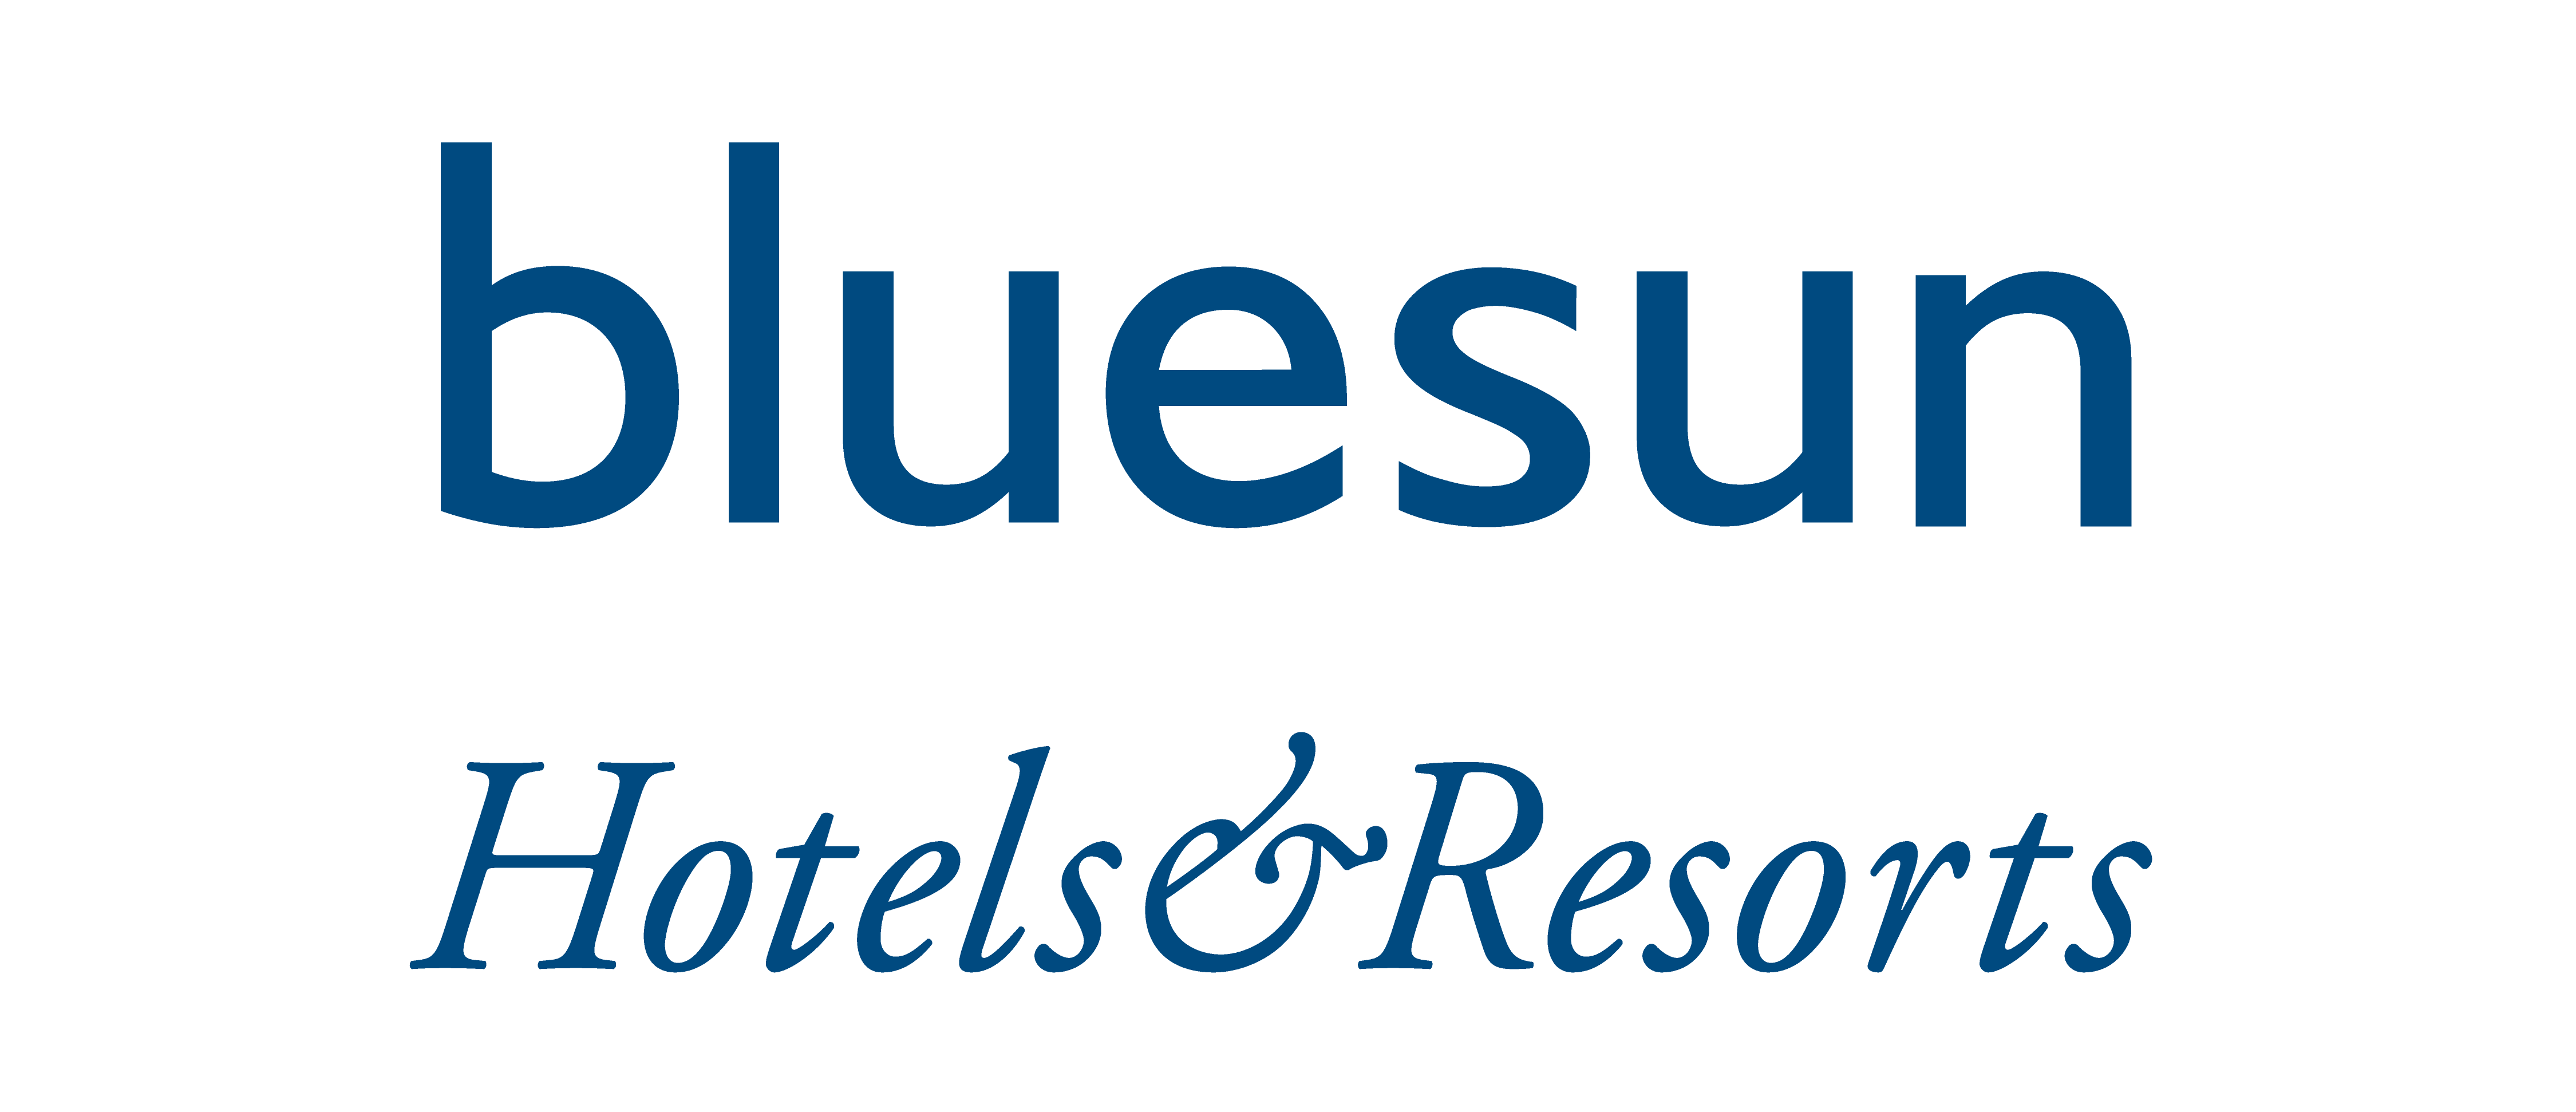 Bluesun Hotels and Resorts logo